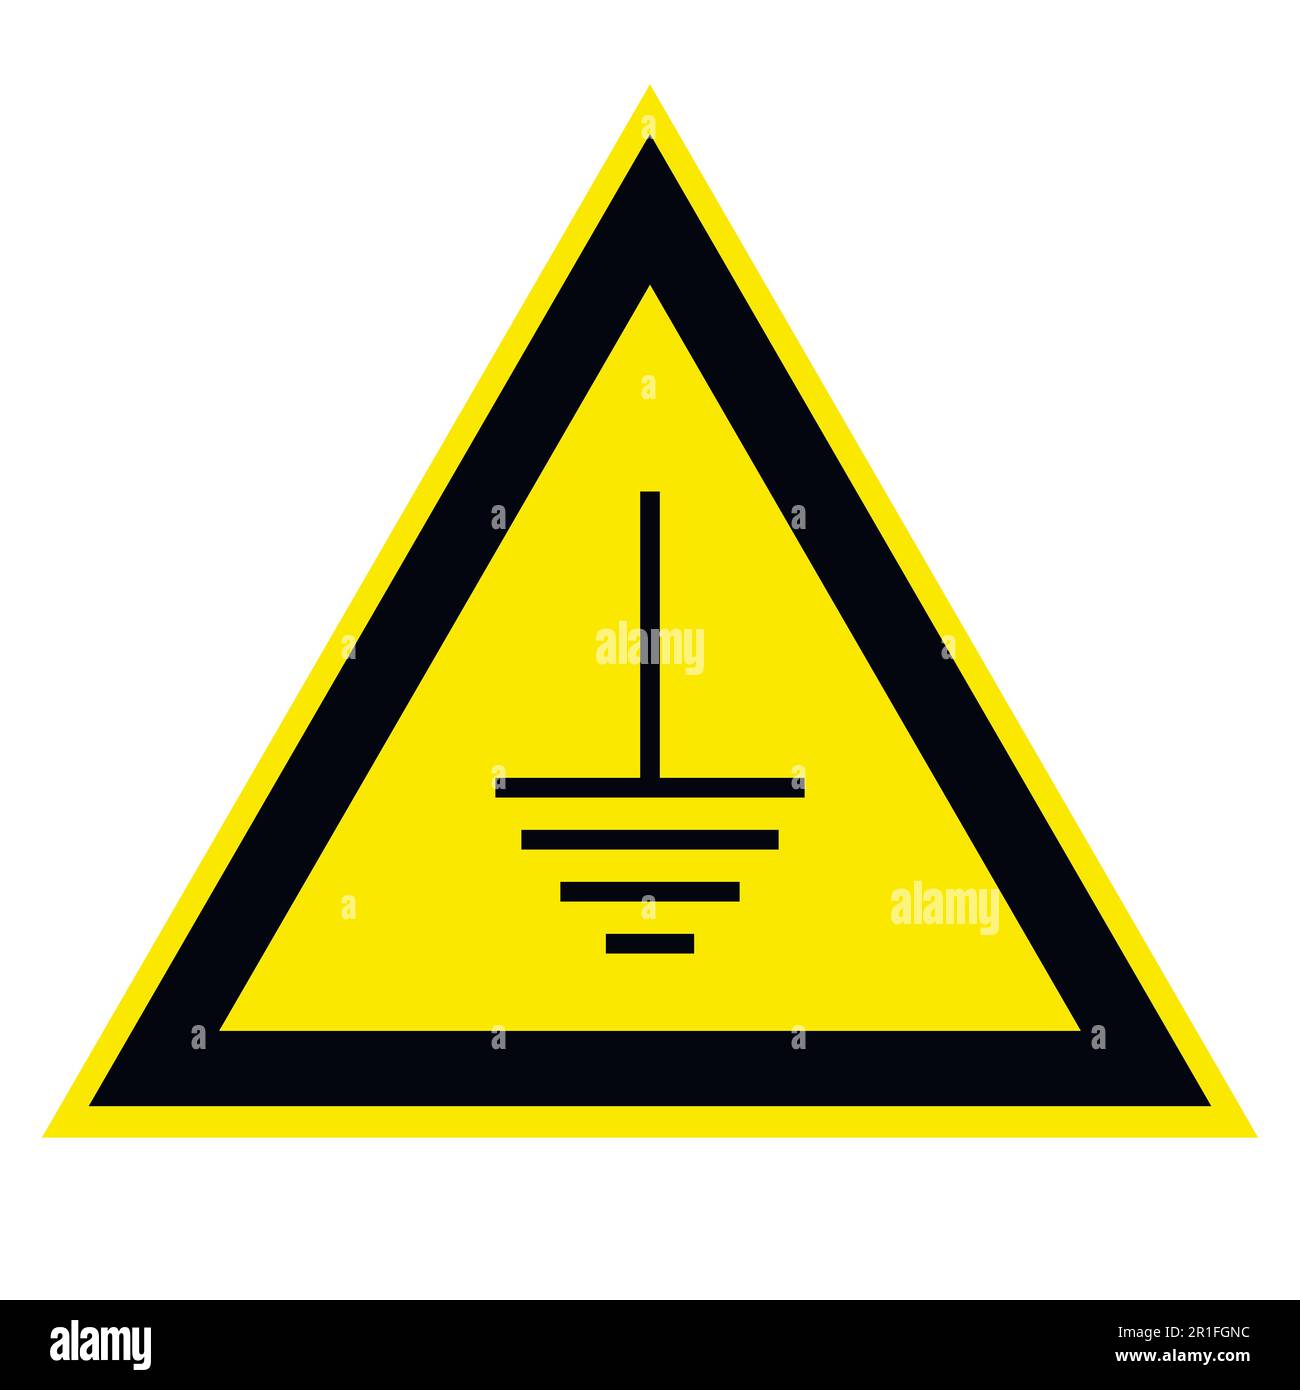 triangular sign grounding electrical equipment Stock Vector